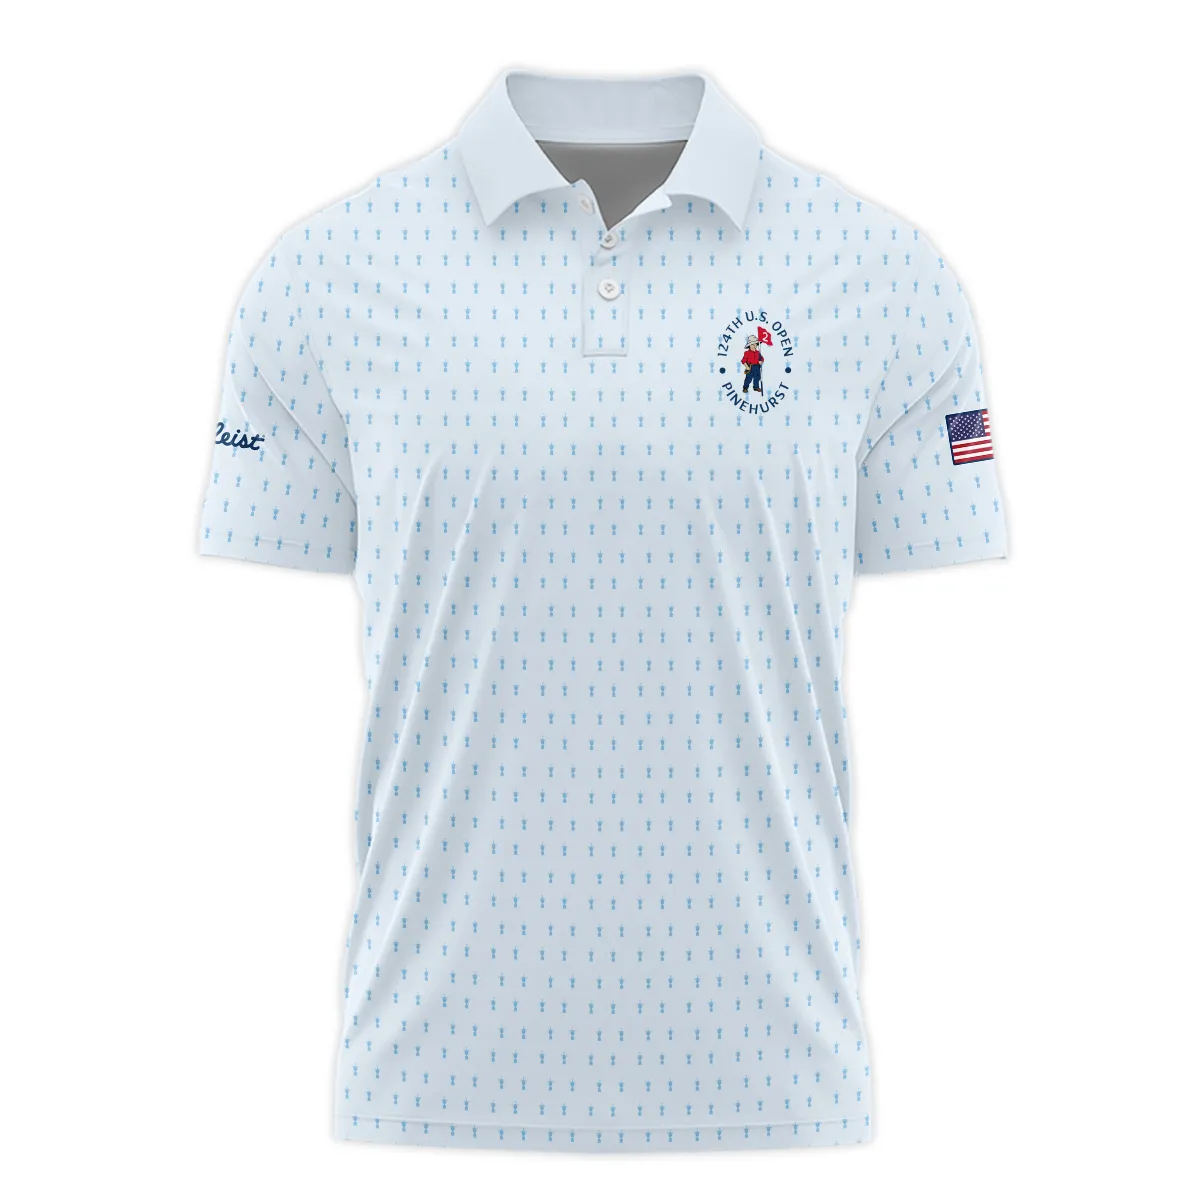 Golf Pattern Light Blue Cup 124th U.S. Open Pinehurst Titleist Hoodie Shirt Style Classic